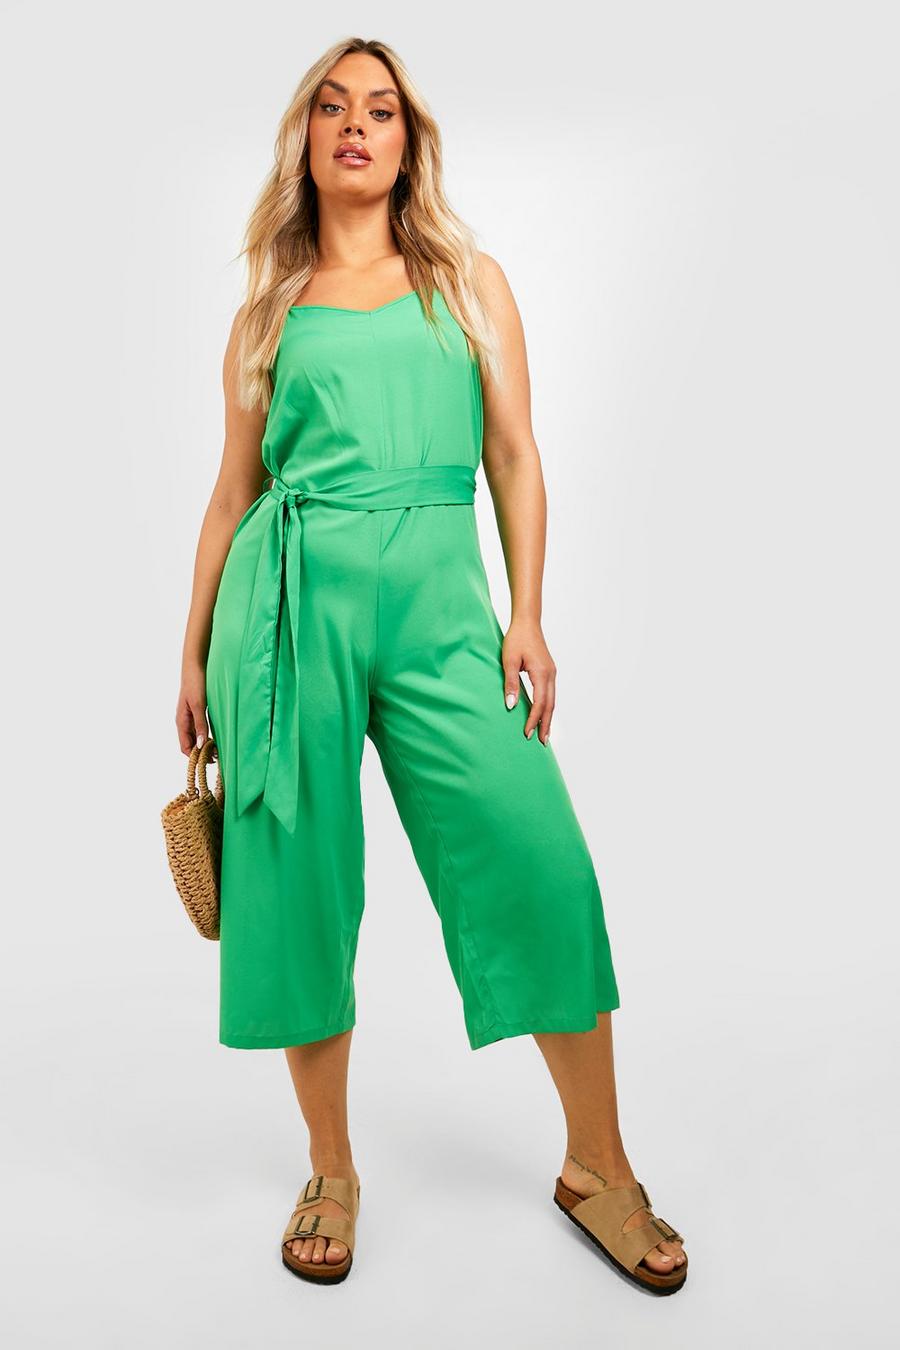 Grande taille - Combinaison jupe-culotte à bretelles fines, Bright green